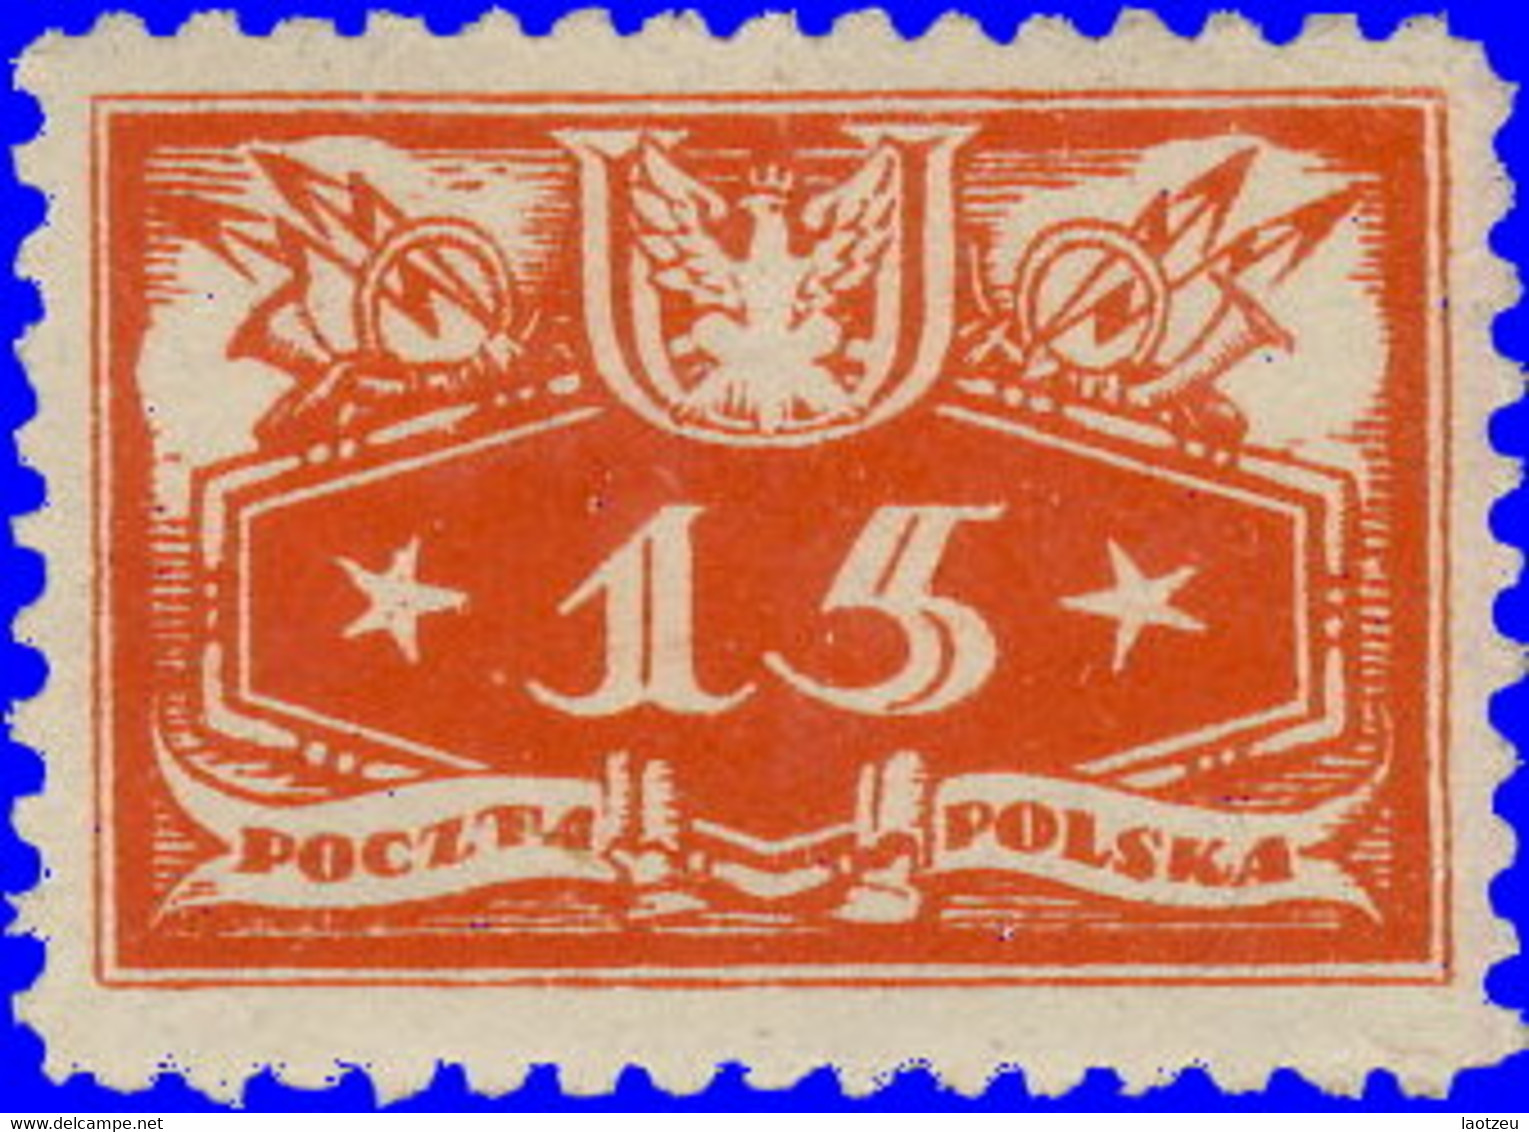 Pologne Service 1920. ~ S 4* - 15 F. Service - Dienstzegels